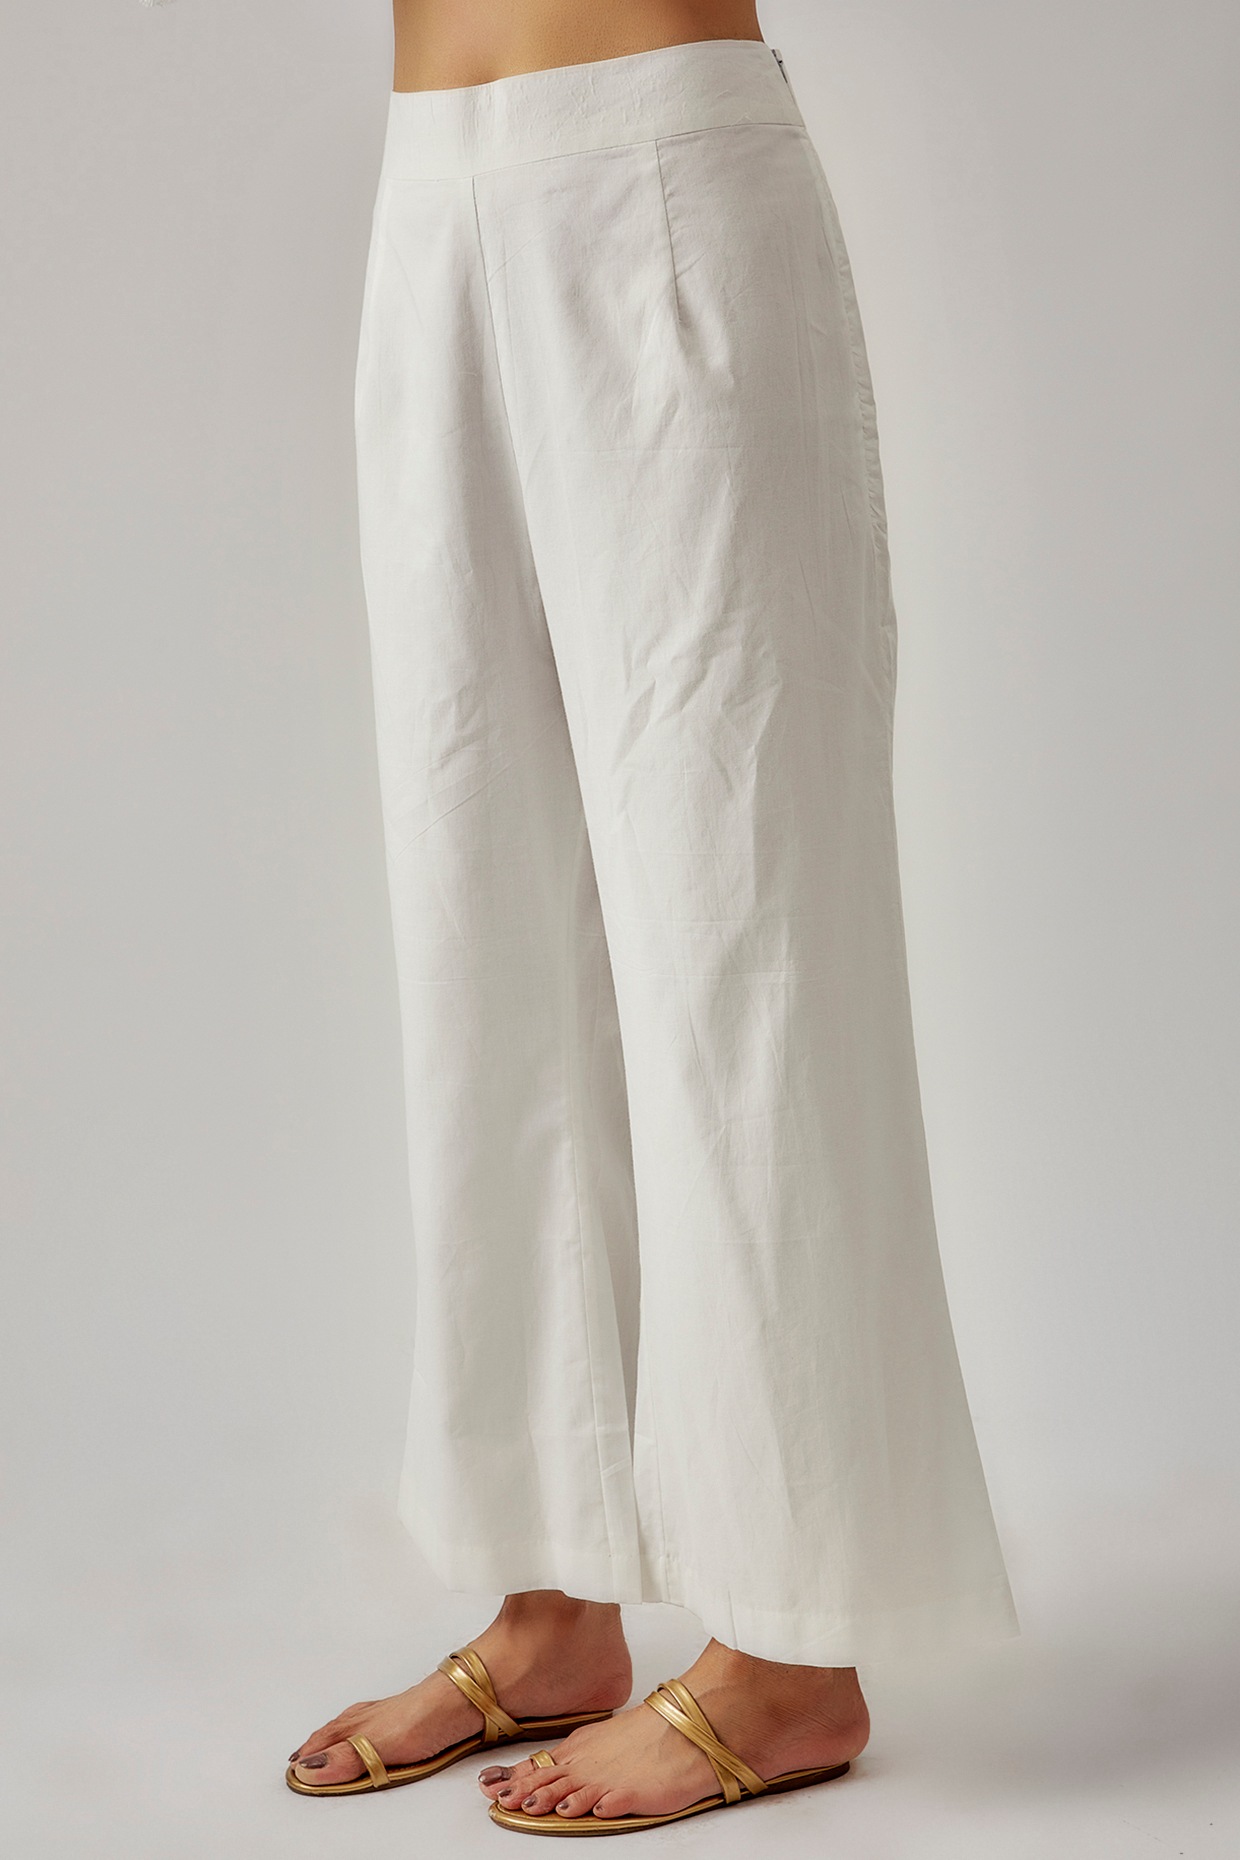 Cotton Blue & White Angarakha Printed Kurta Pant Set with Mulmul Dupatta |  Kurta with pants, Angrakha style, Suit fabric